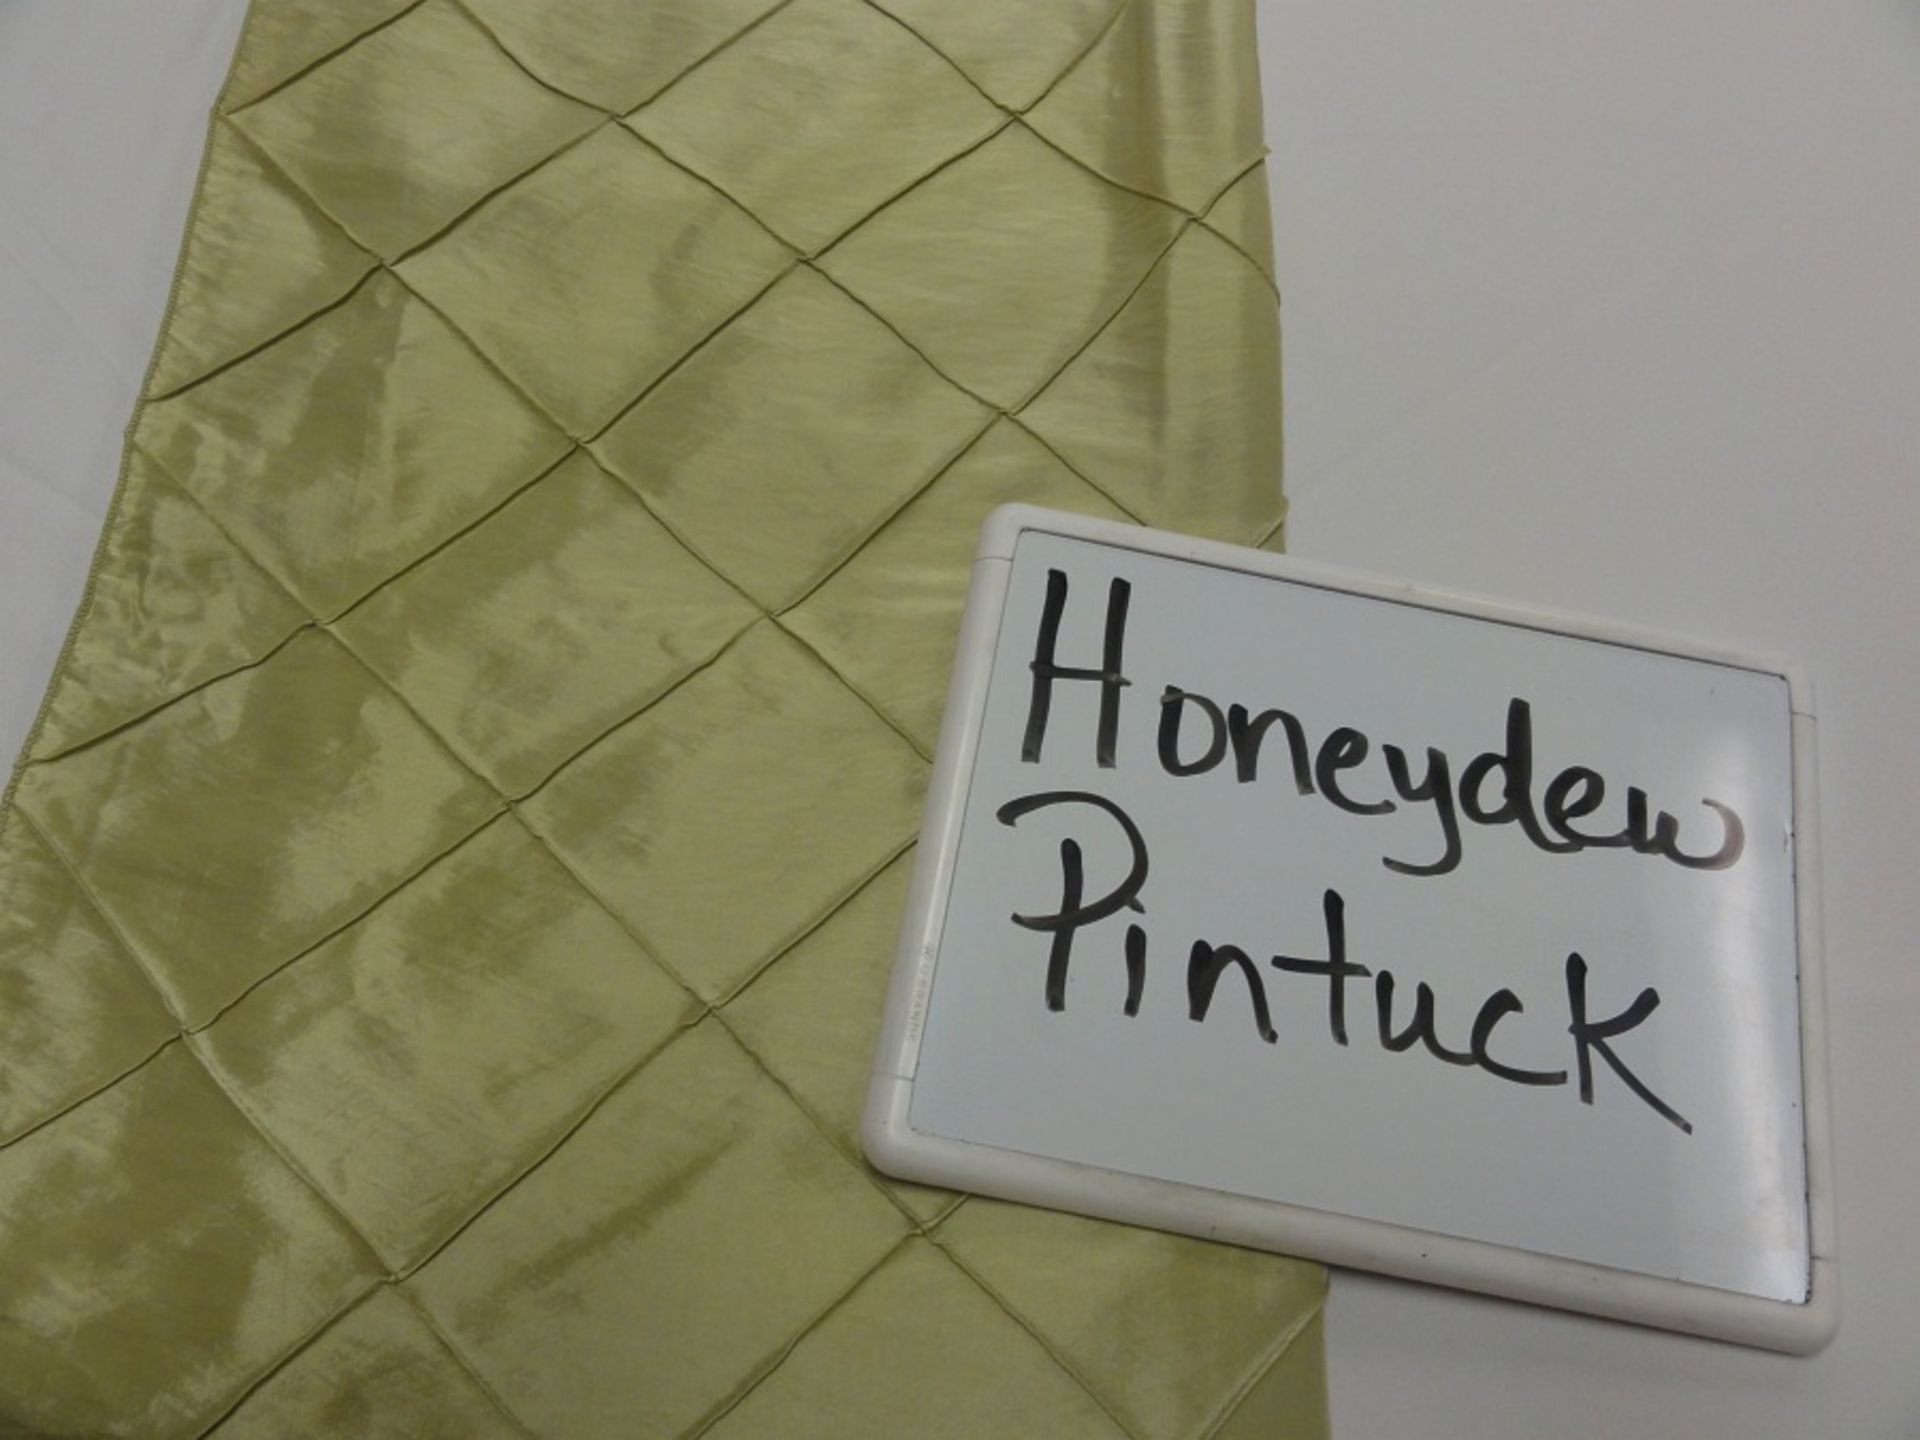 Honey Dew Pintuck (Bombay) 90x132